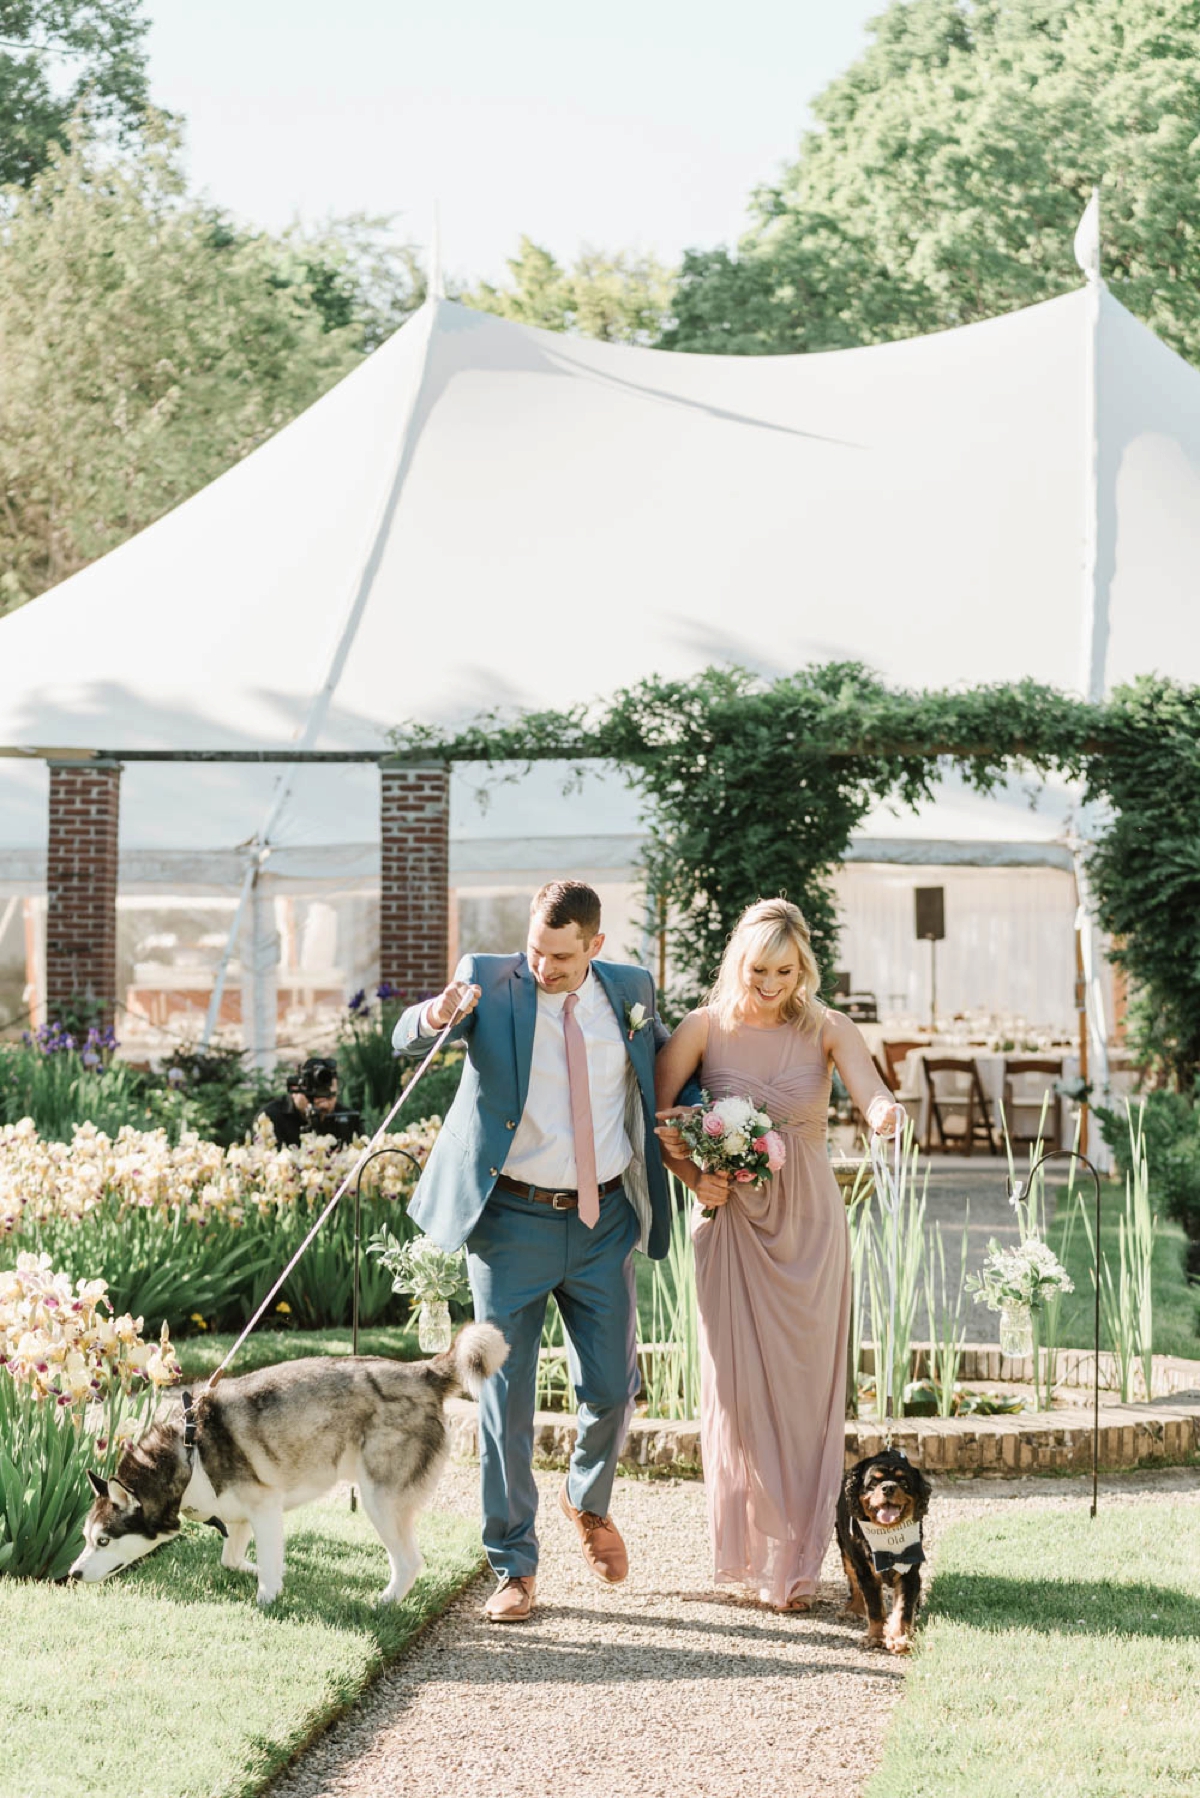 Garden Inspired Summer Wedding at Glen Magna Farms in Danvers, Massachusetts by Boston Wedding Photographer Annmarie Swift - Sunny ceremony in courtyard